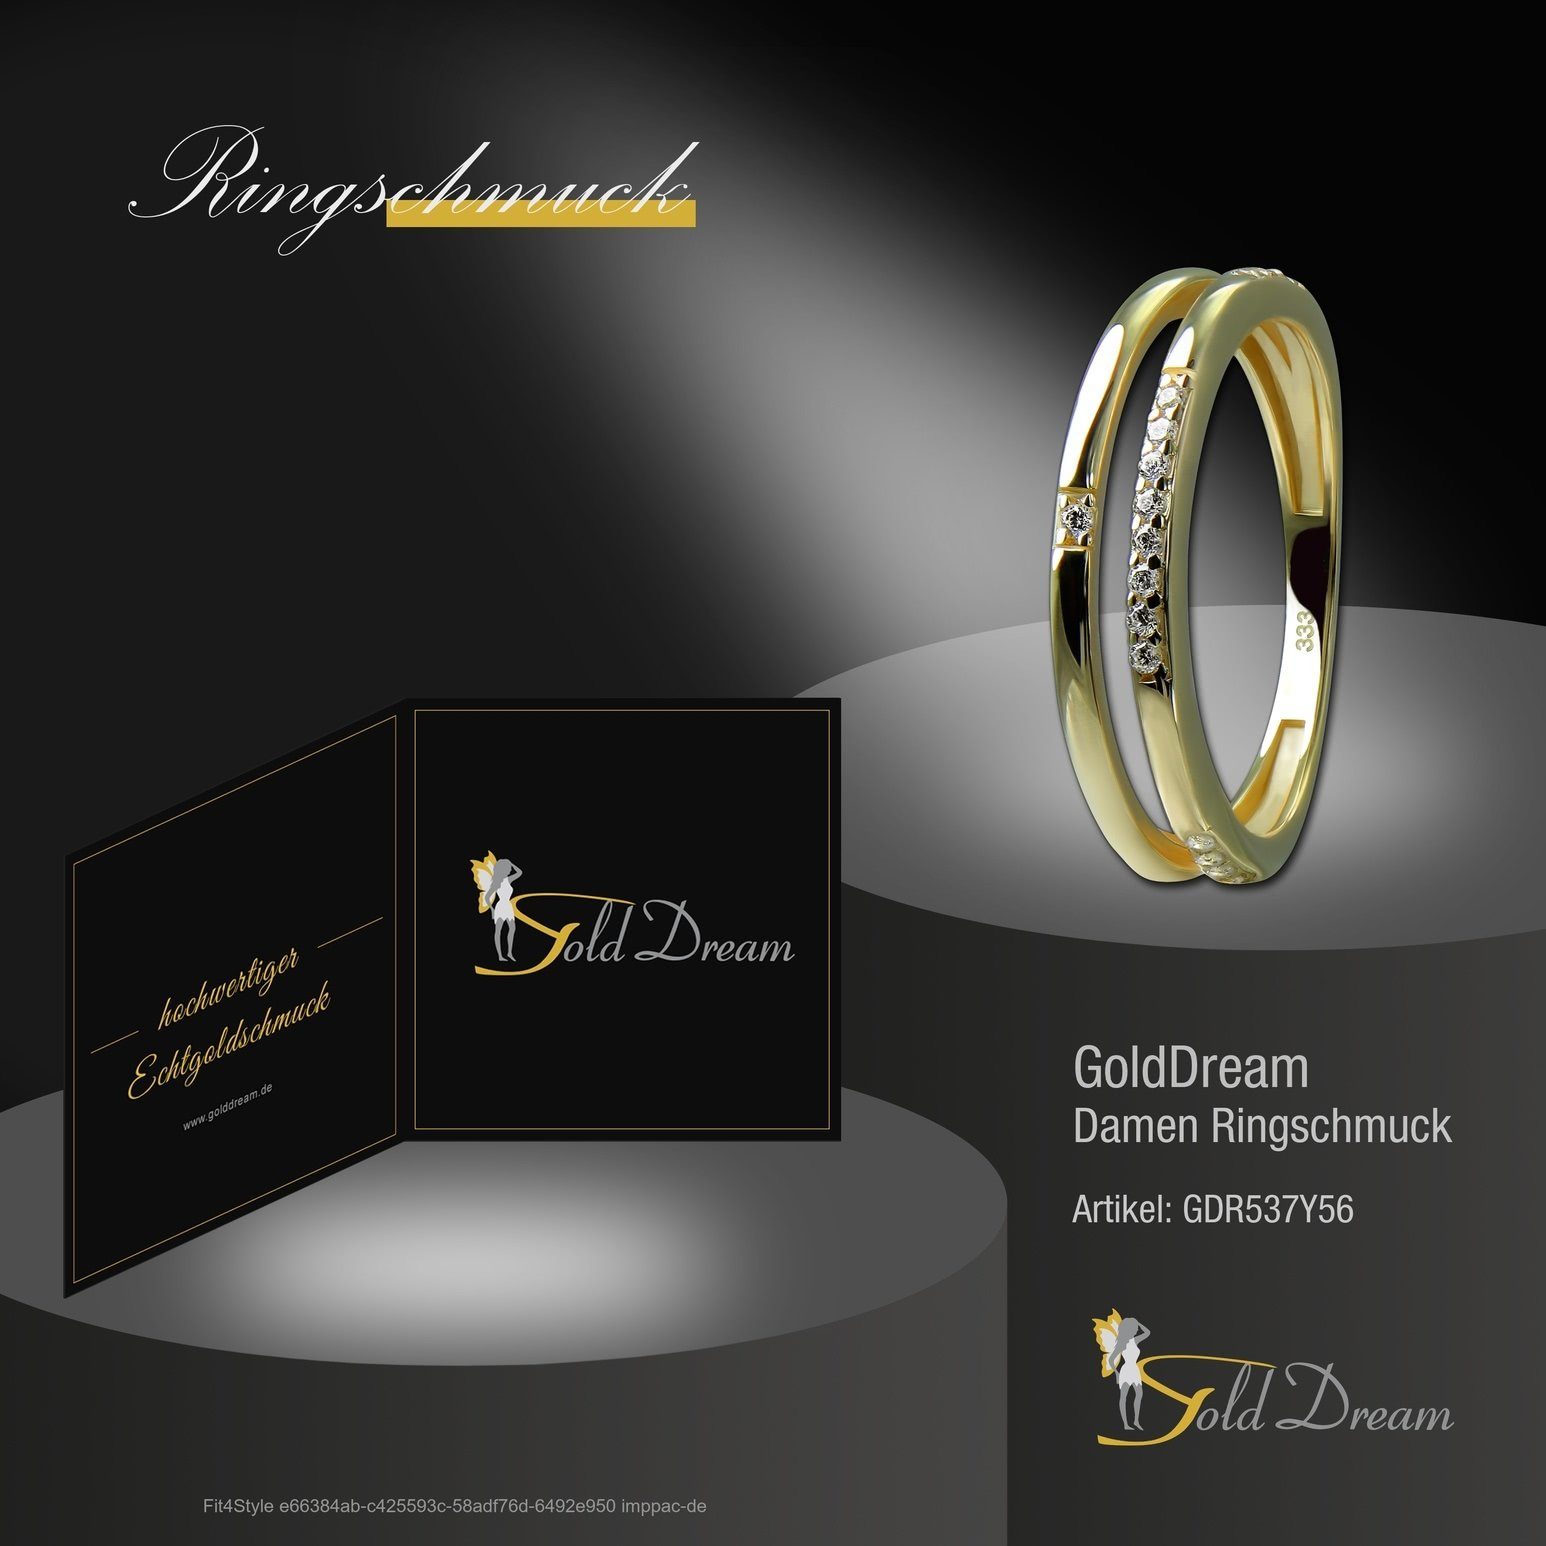 GoldDream Double Damen Ring 333 Gelbgold Gold GoldDream gold, Karat, Gr.56 Ring weiß Goldring Double - Farbe: (Fingerring), 8